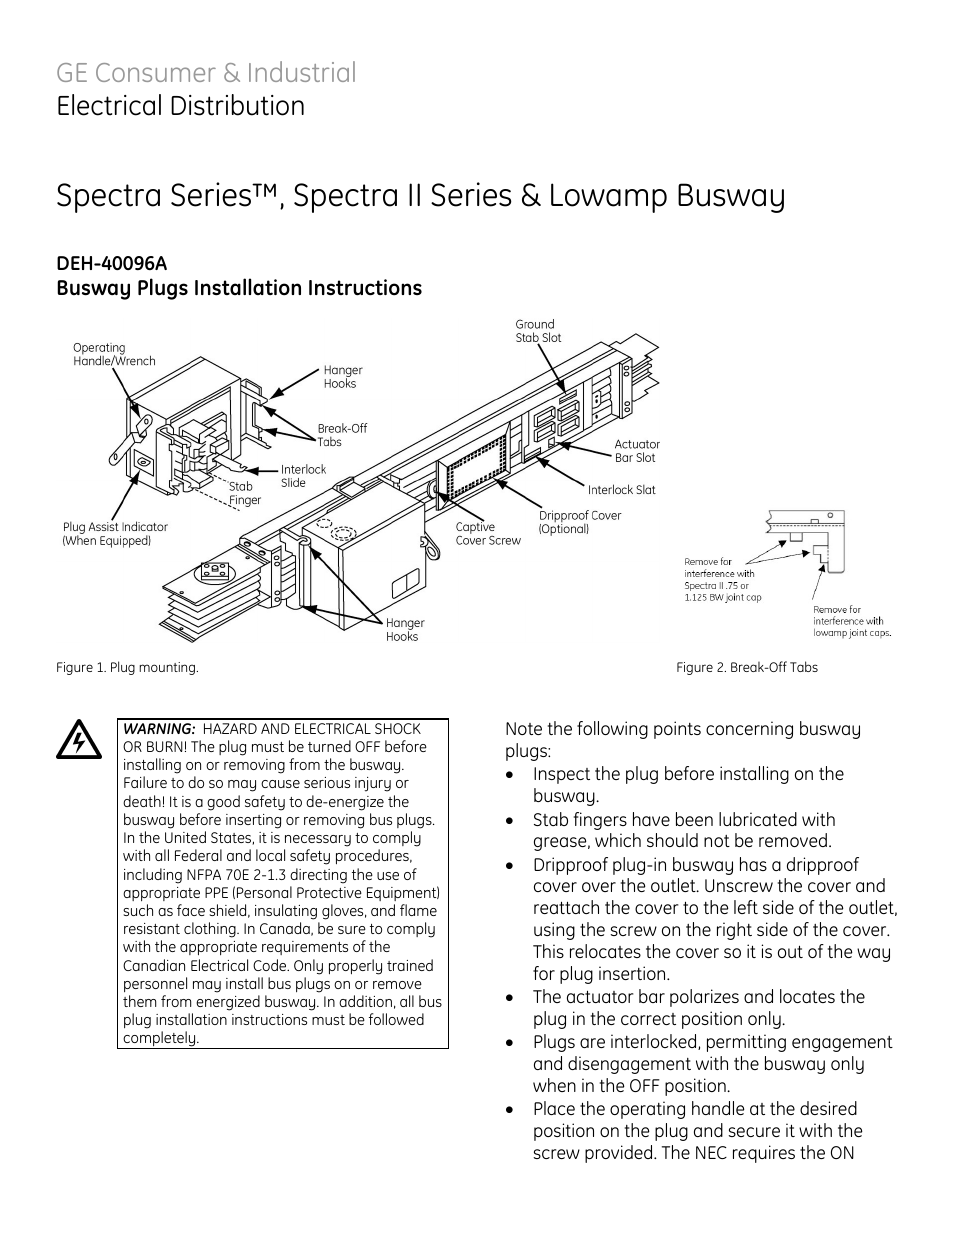 Spectra II Series Busway Plugs